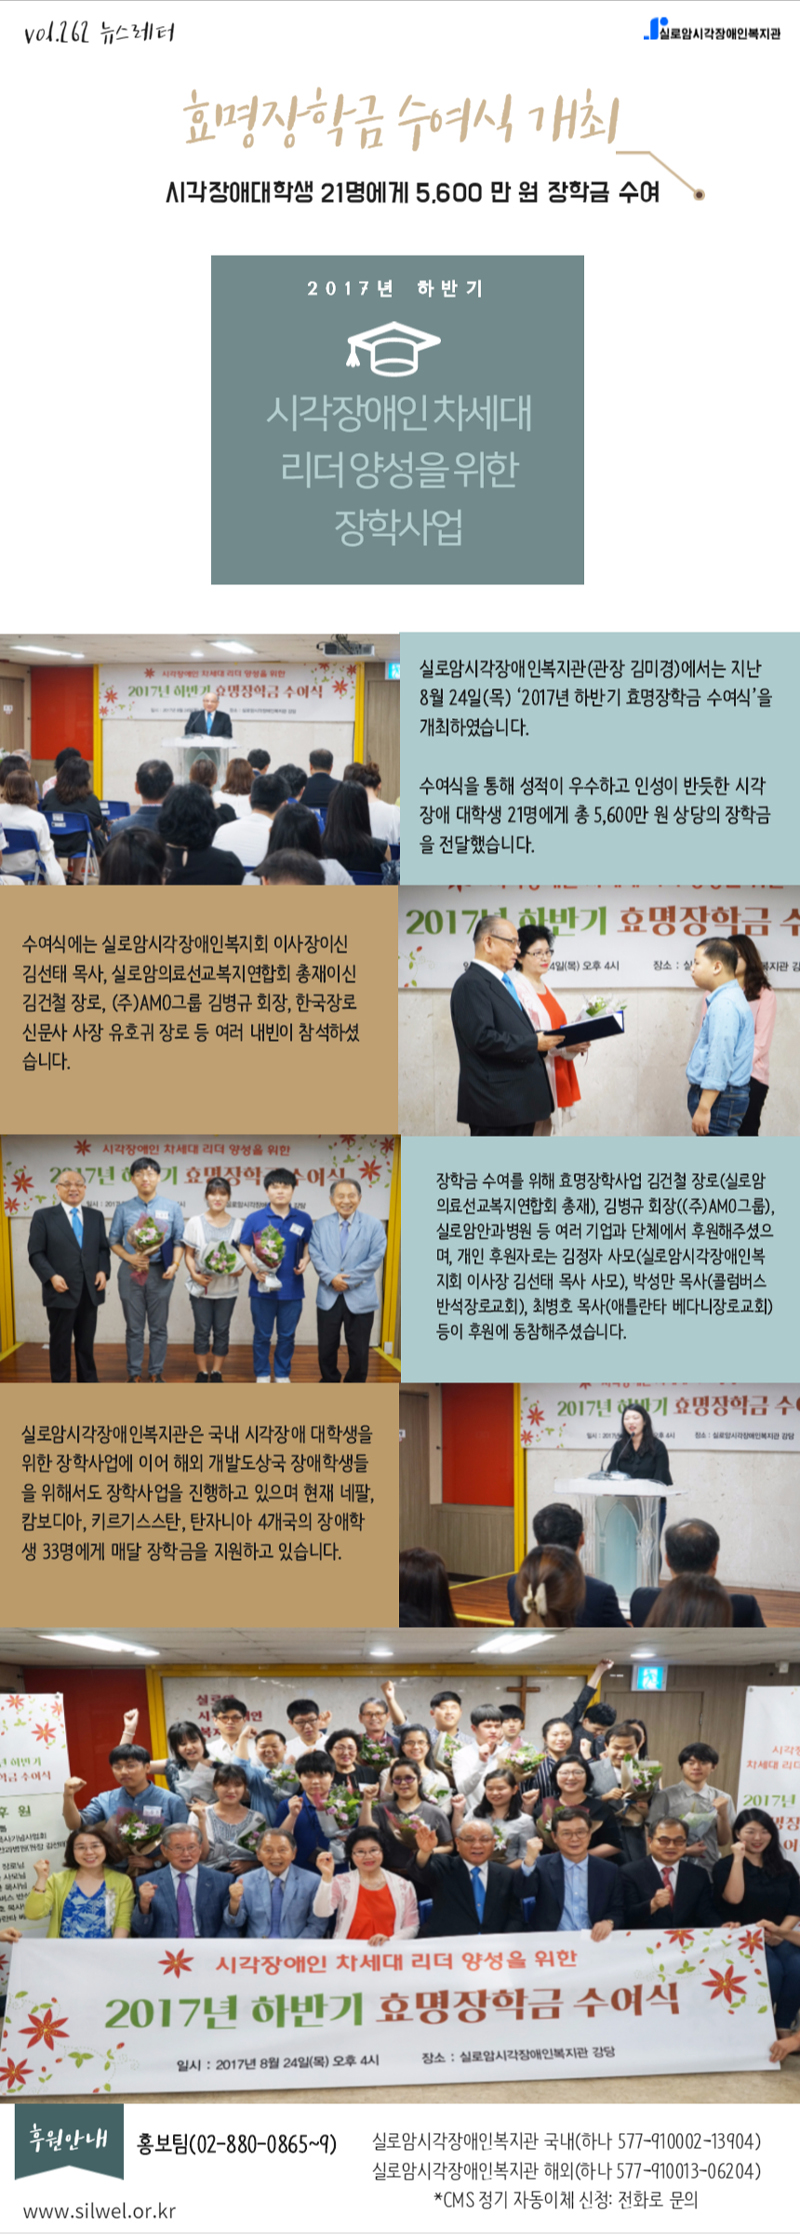 vol.262 2017년 하반기 효명장학금 수여식 개최 썸네일